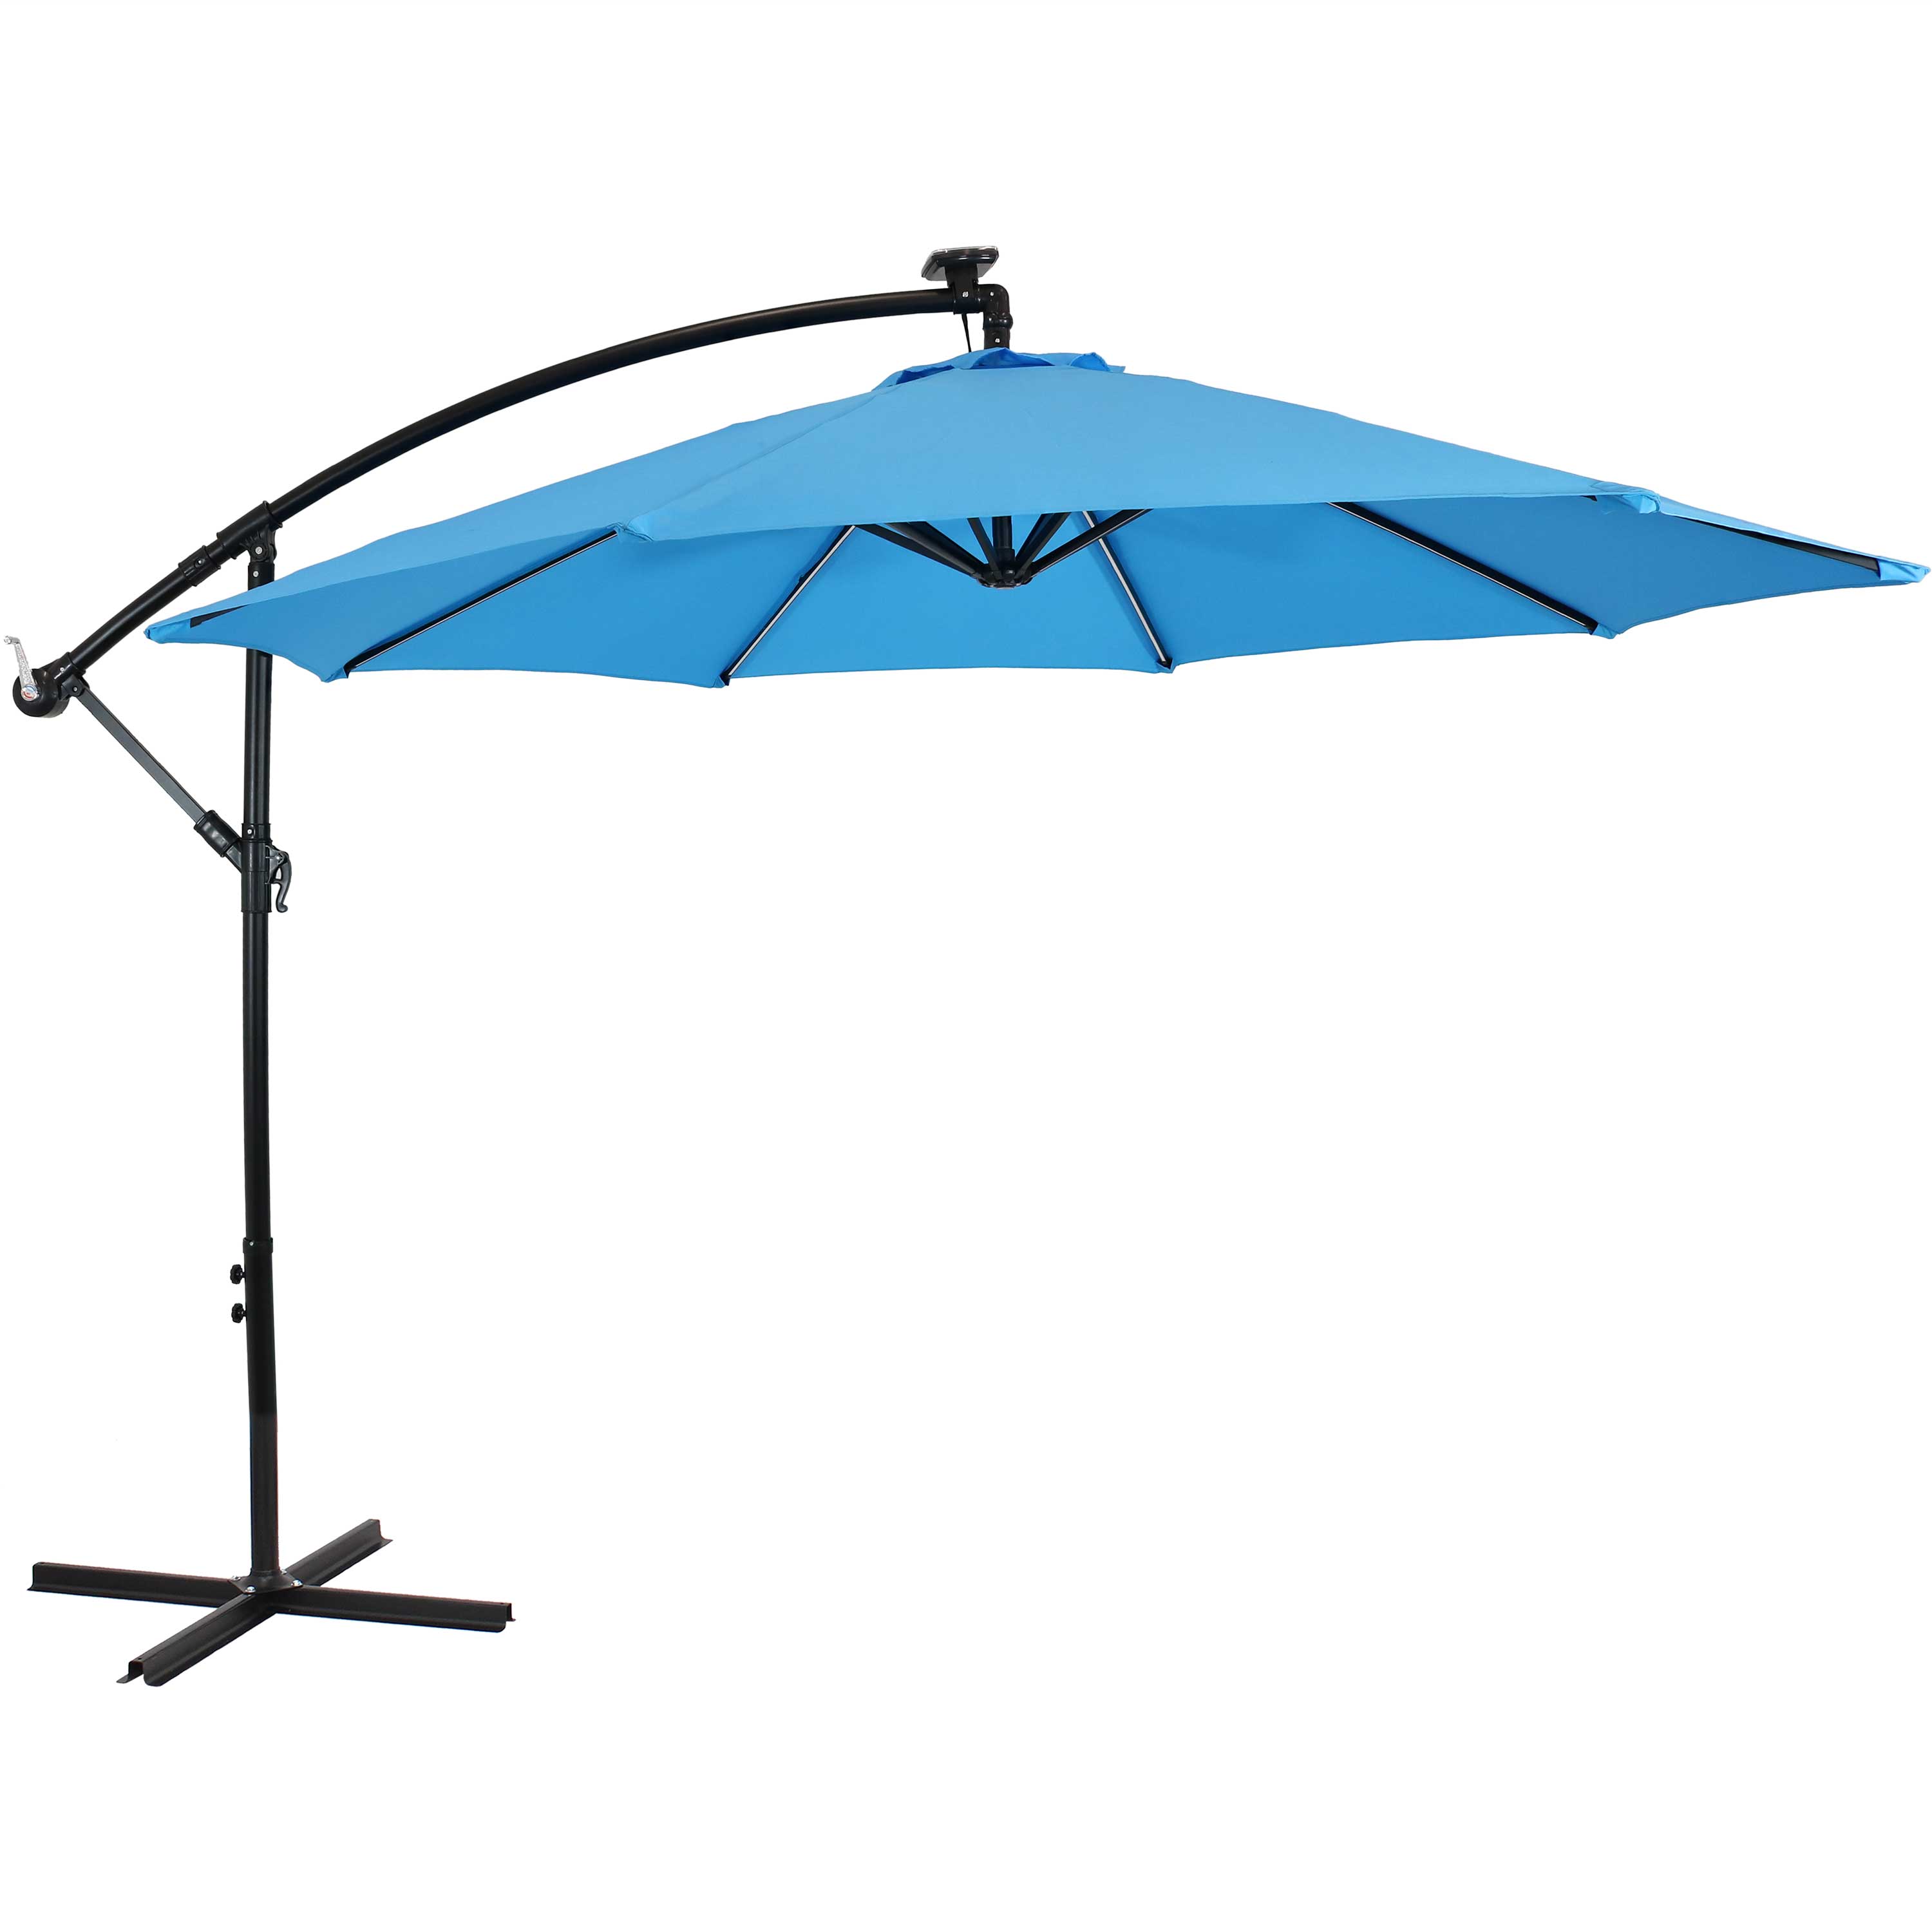 Sunnydaze Offset Patio Umbrella with Solar LED Lights - 9-Foot - Azure